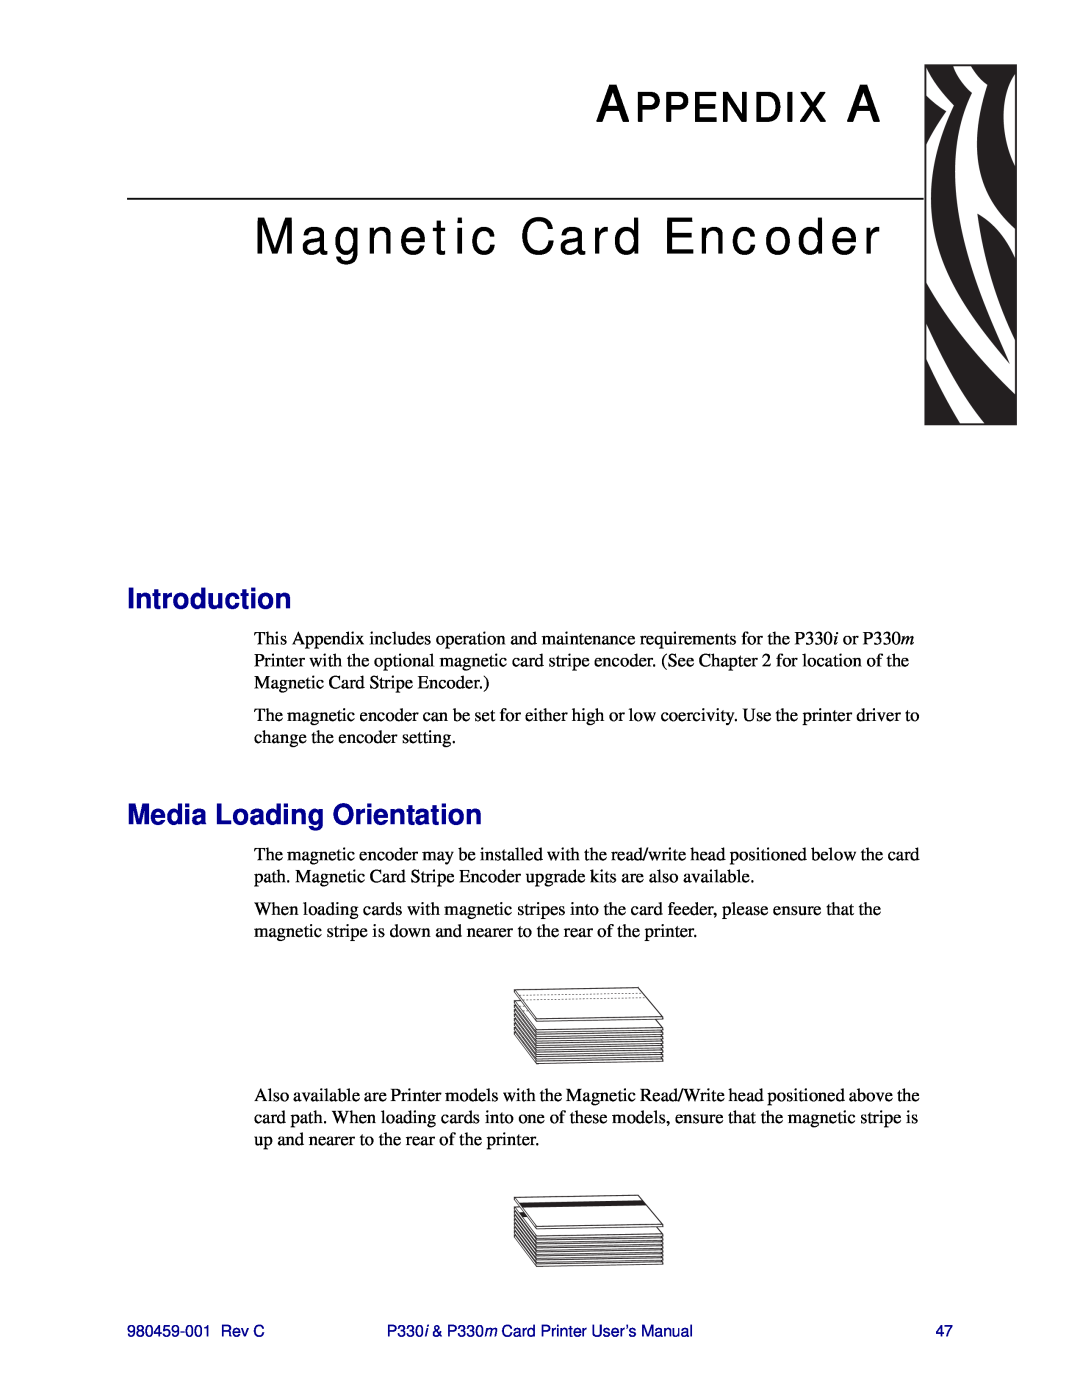 Zebra Technologies P330m, P330i user manual Magnetic Card Encoder, Appendix A, Introduction, Media Loading Orientation 